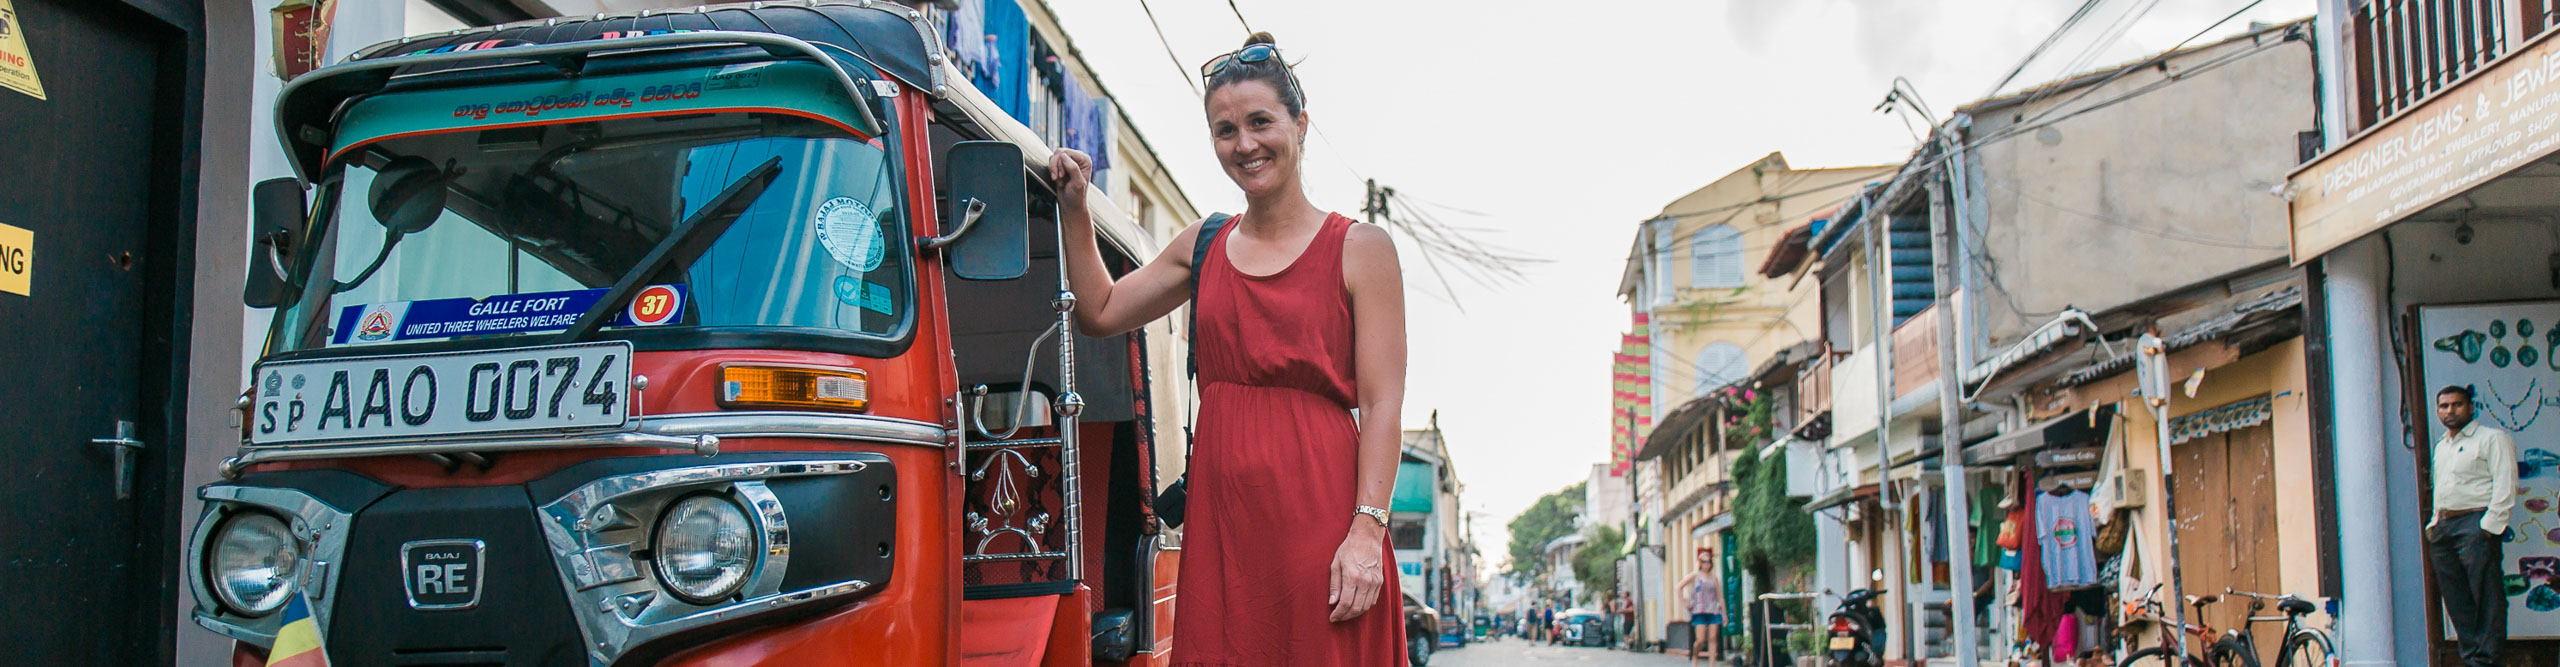 Woman in red dress standing next to a tuk tuk taxi in Sri Lankan street 